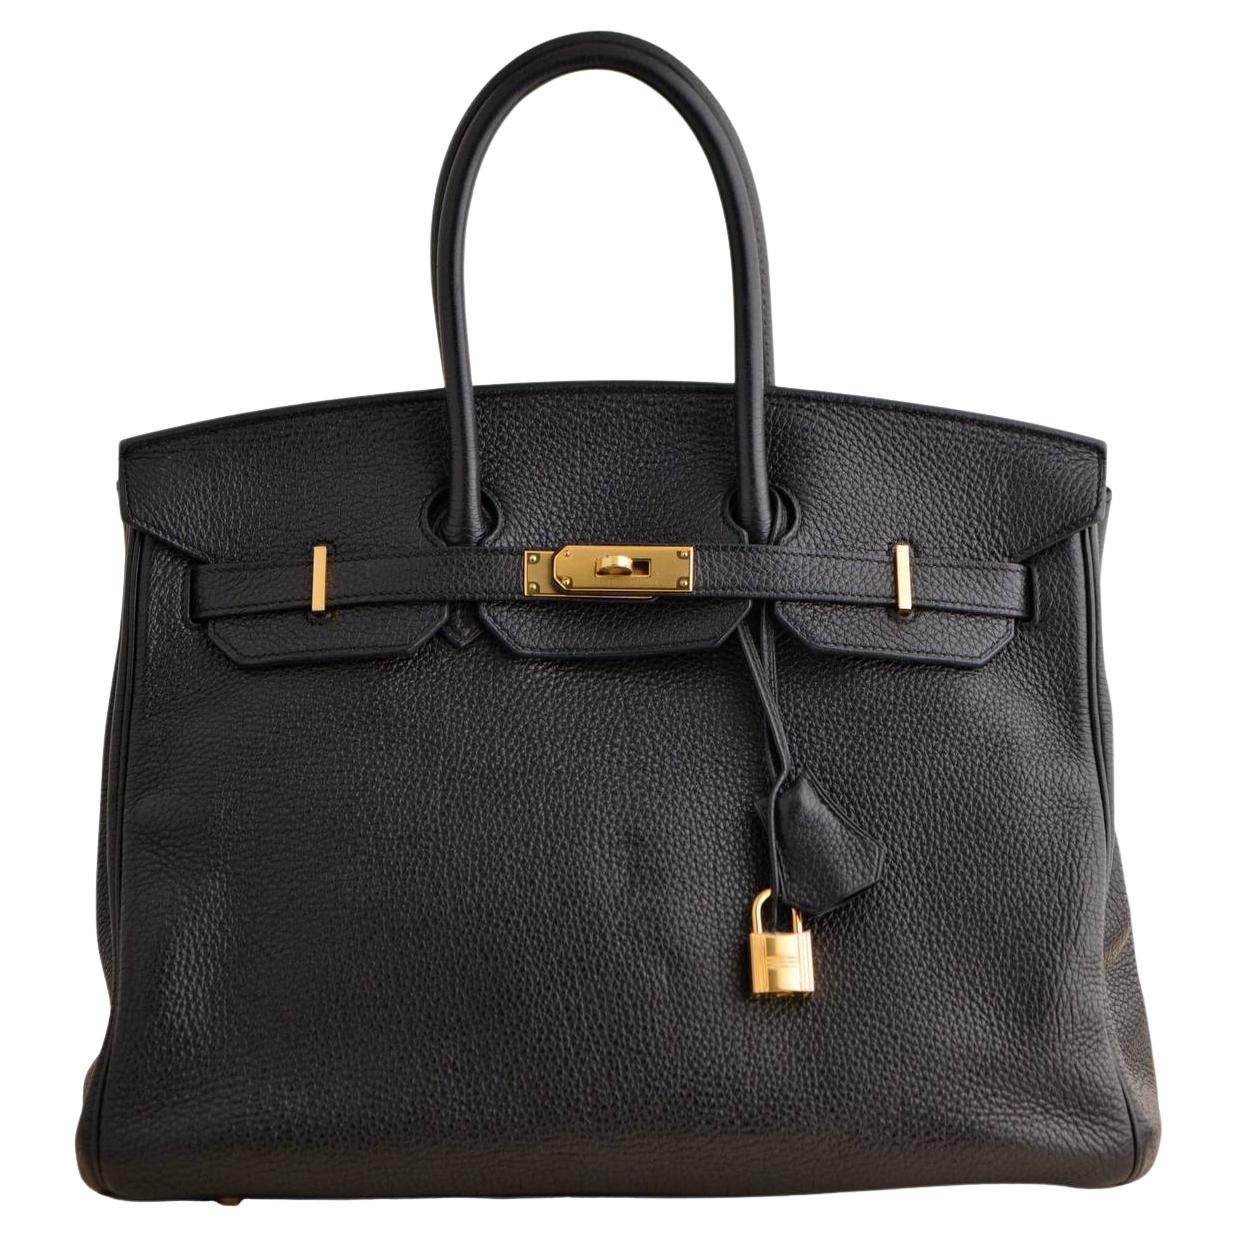 How can I authenticate a Hermès Birkin bag?